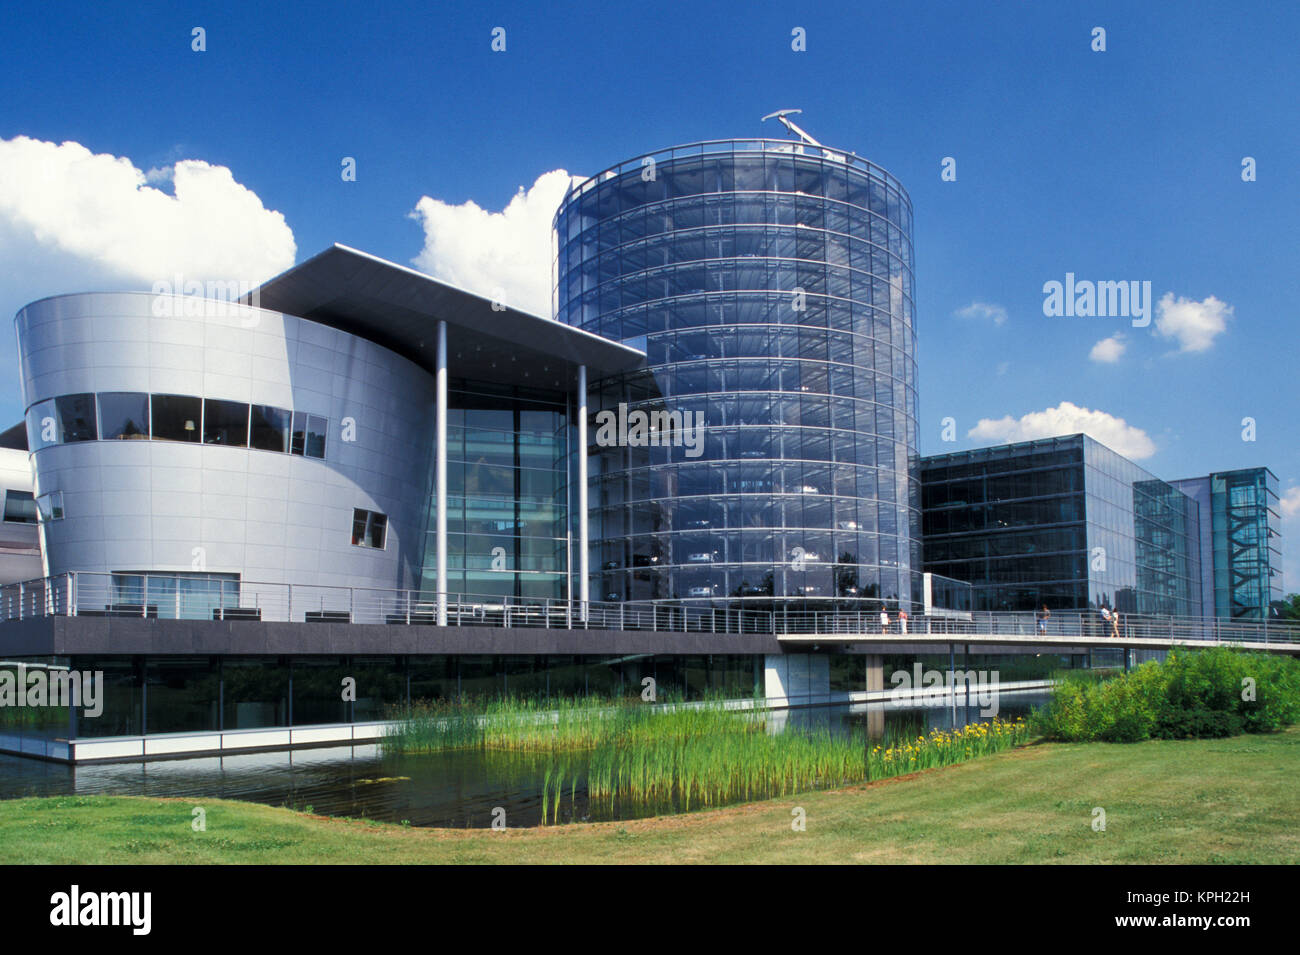 Germany, Saxony, Dresden. Volkswagen glass car factory Stock Photo